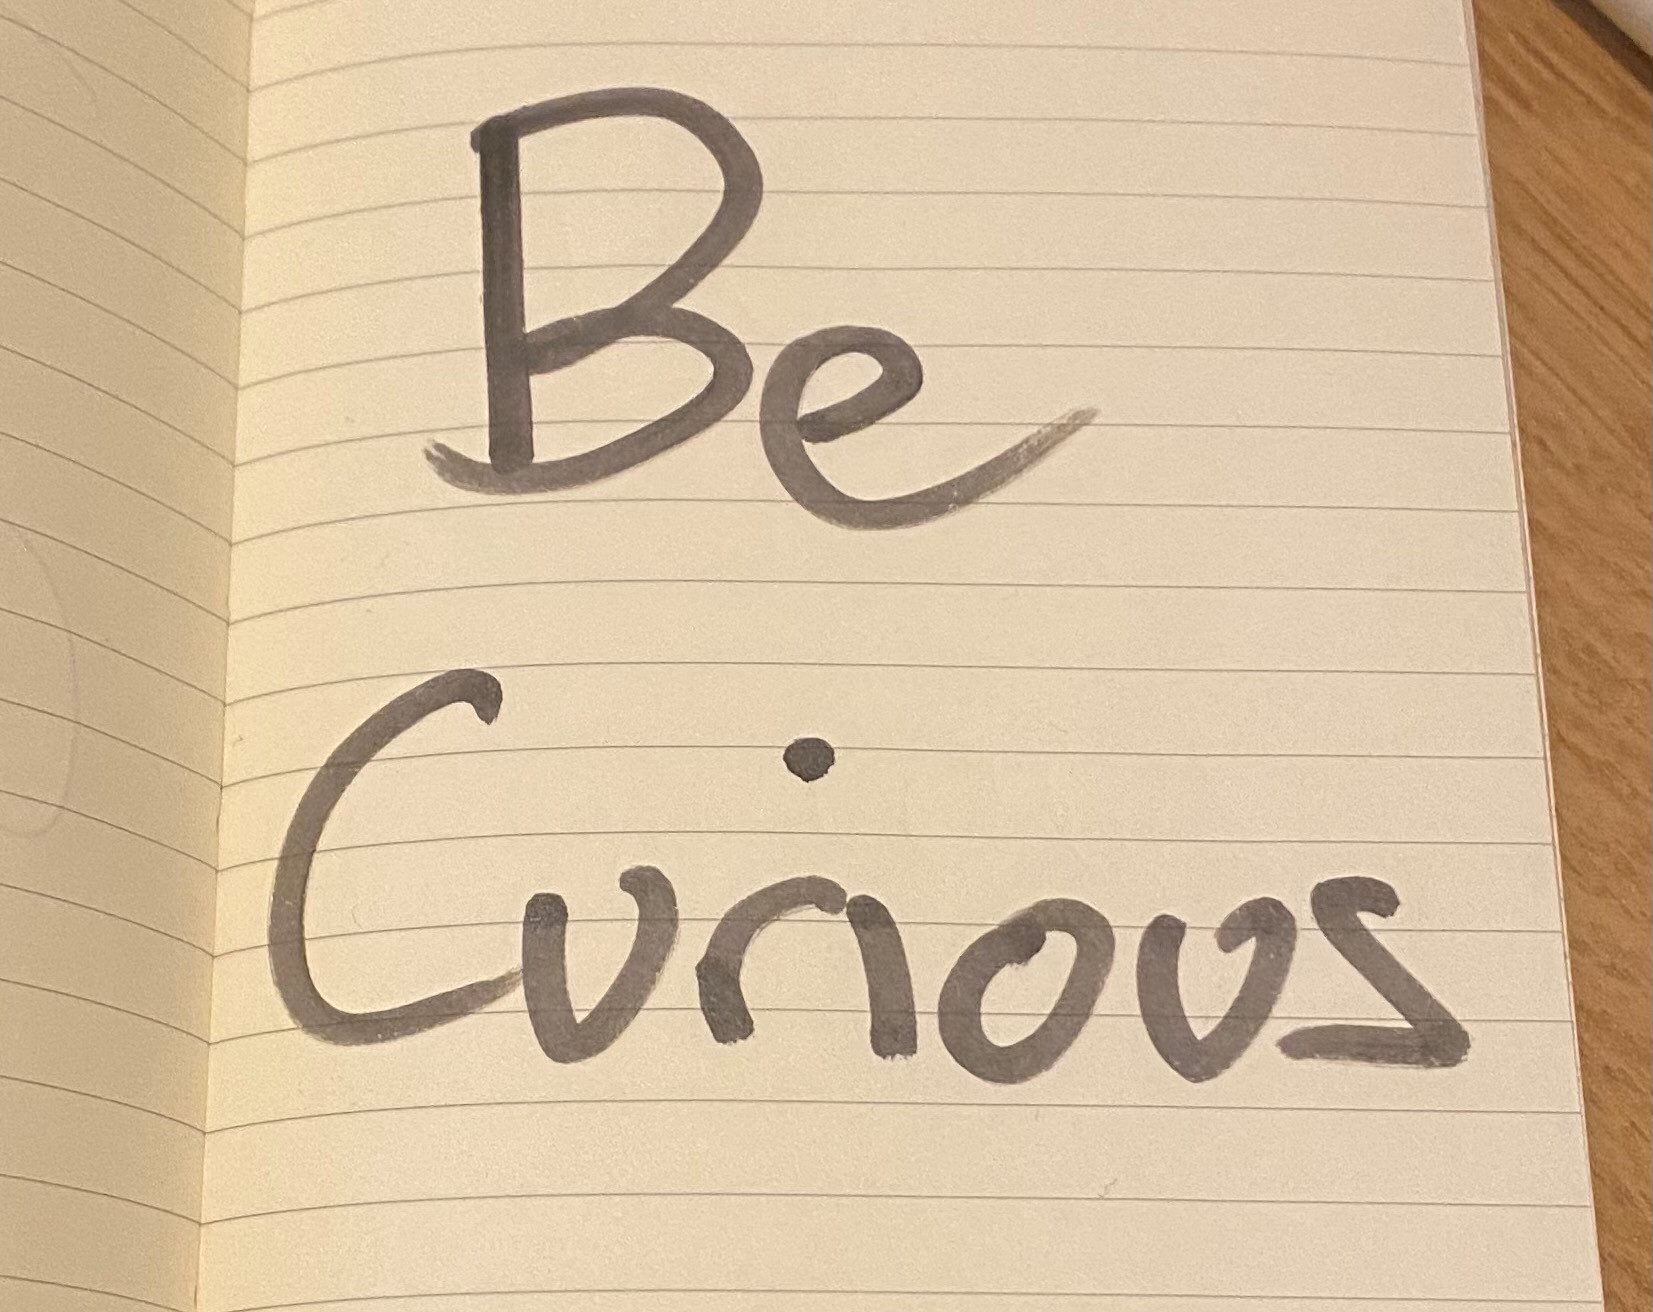 be curious